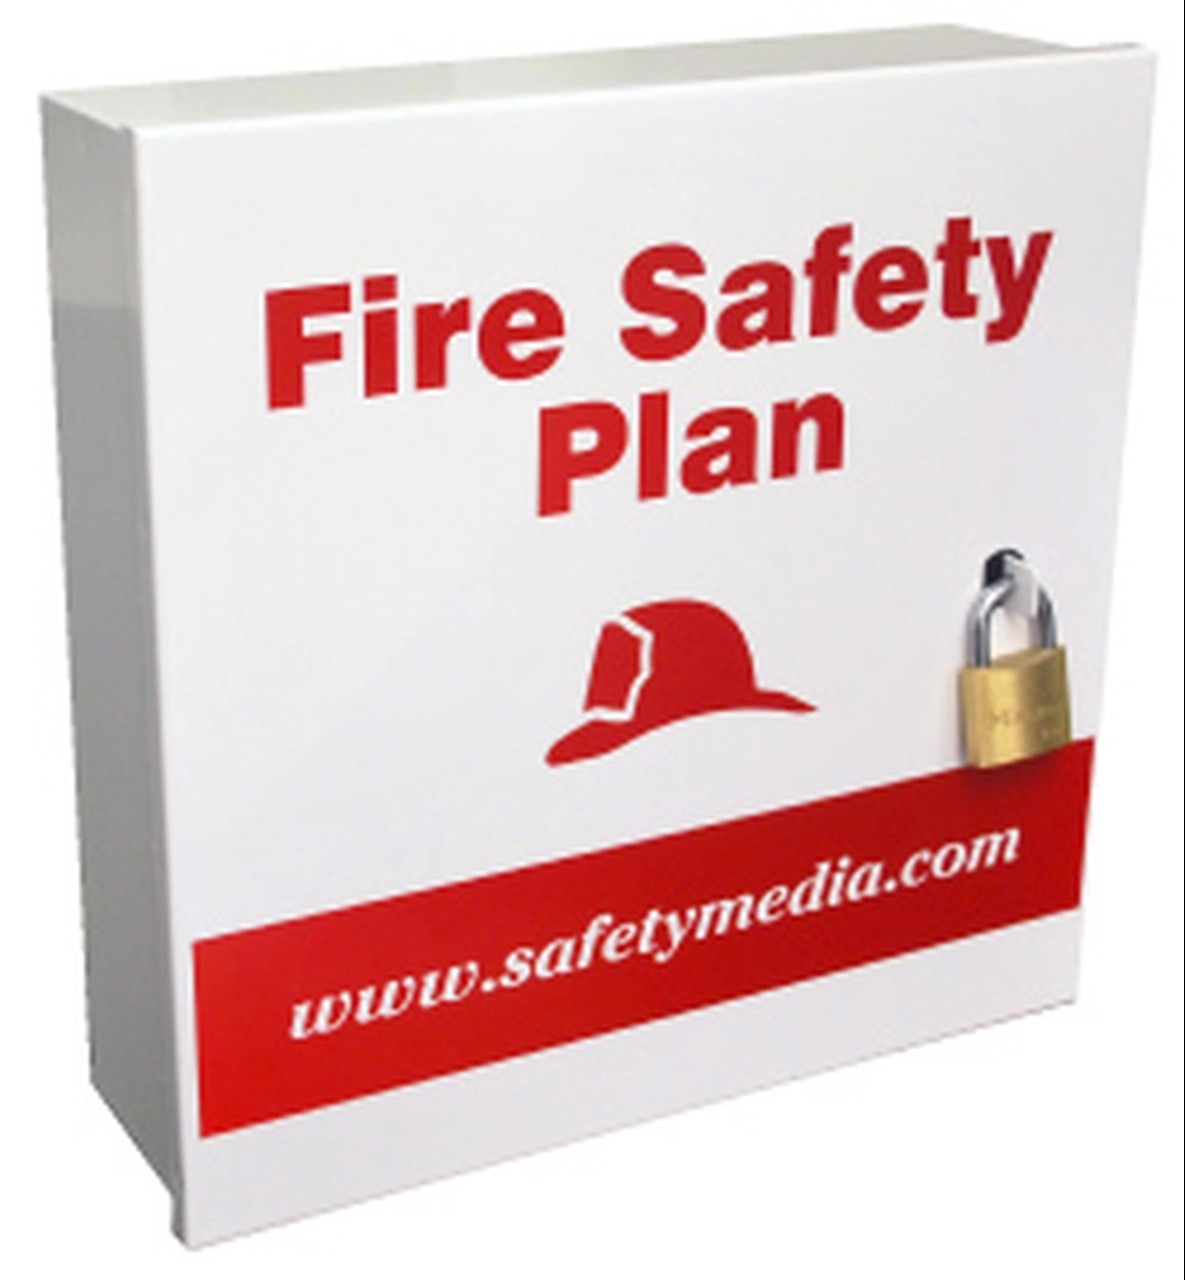 Fire Safety Plan Box 141